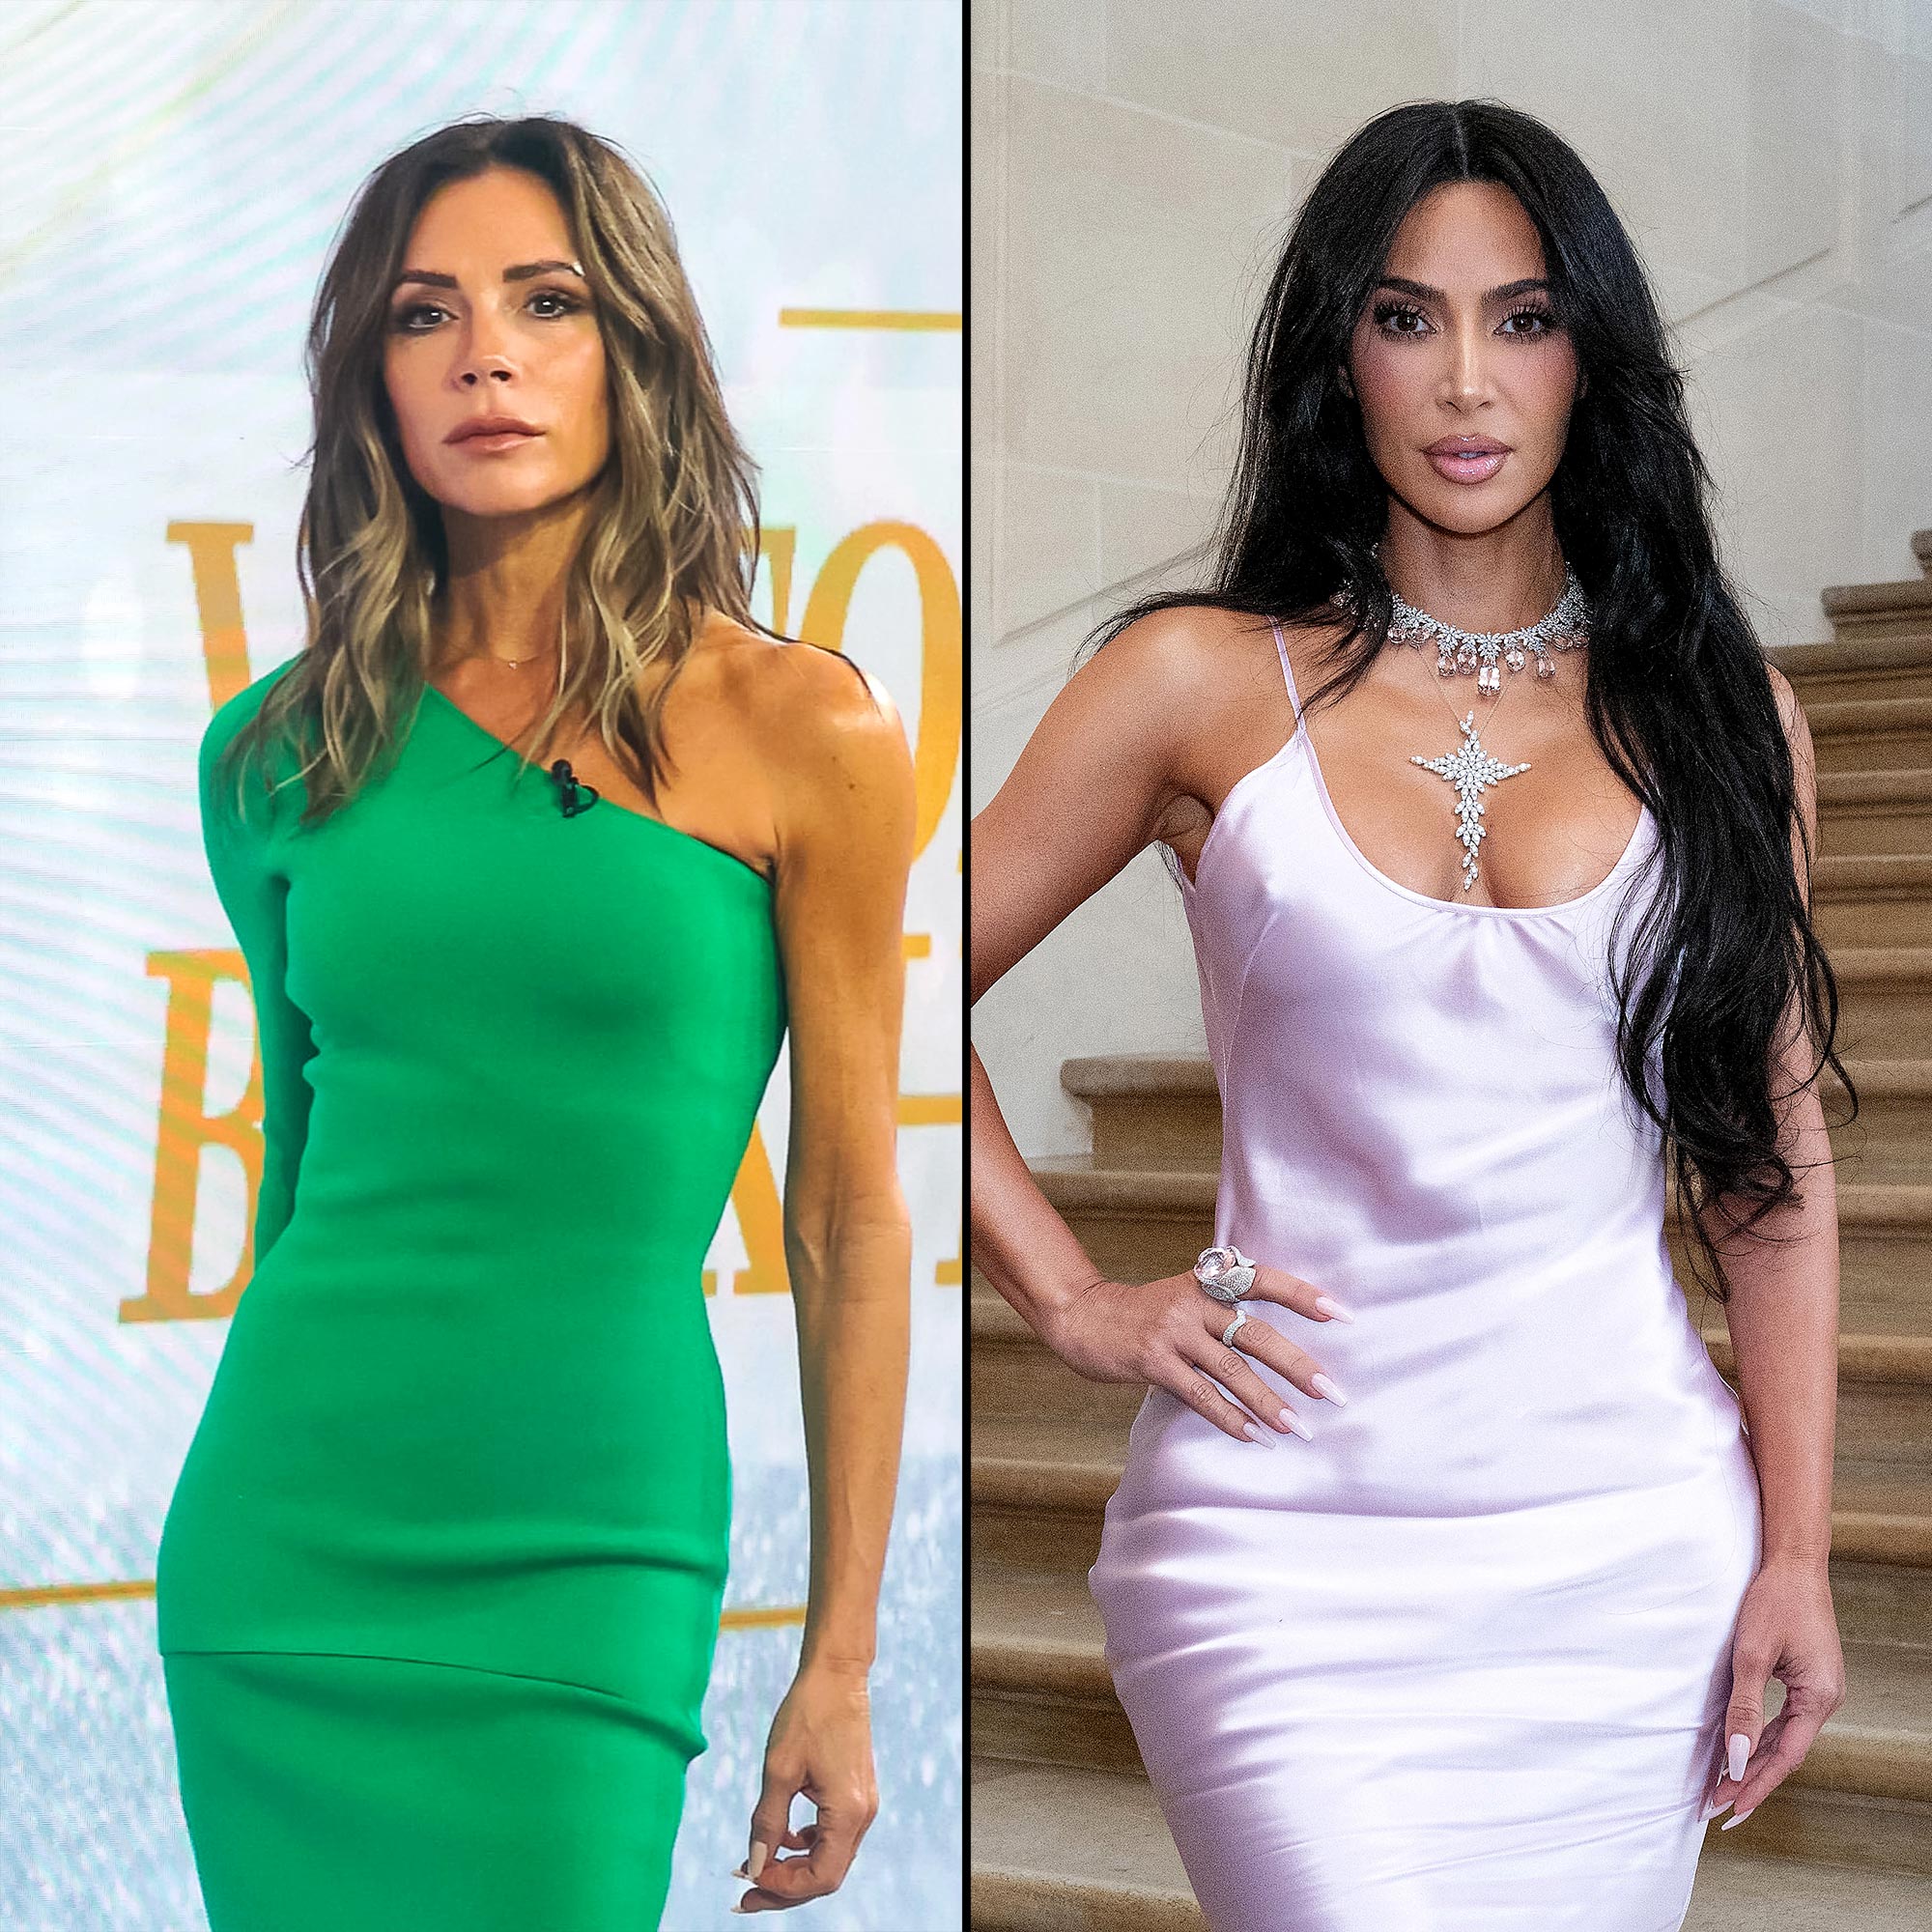 Victoria Beckham Says Kim Kardashian Is 1 of Her Fashion Week 'Muses'